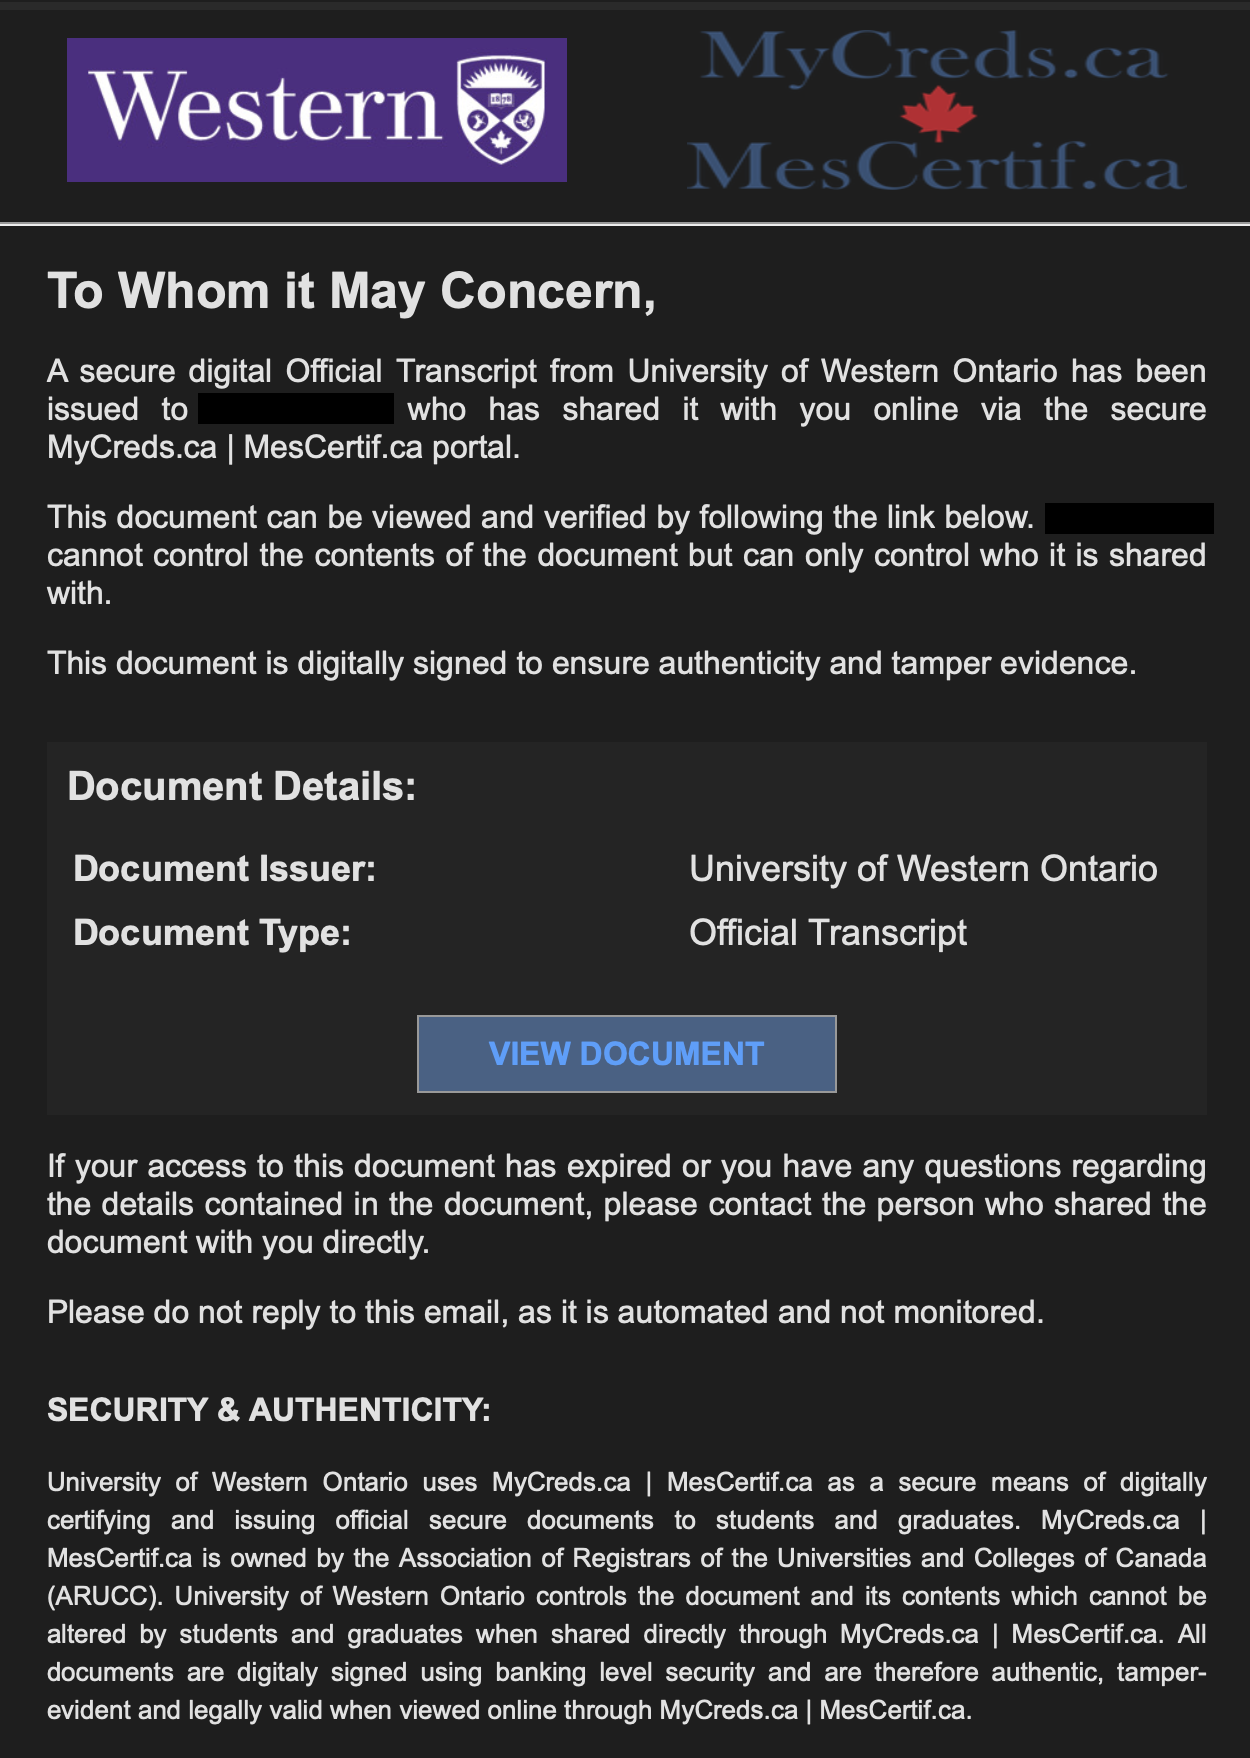 A screenshot of an email the recipient of a MyCreds transcript will recieve